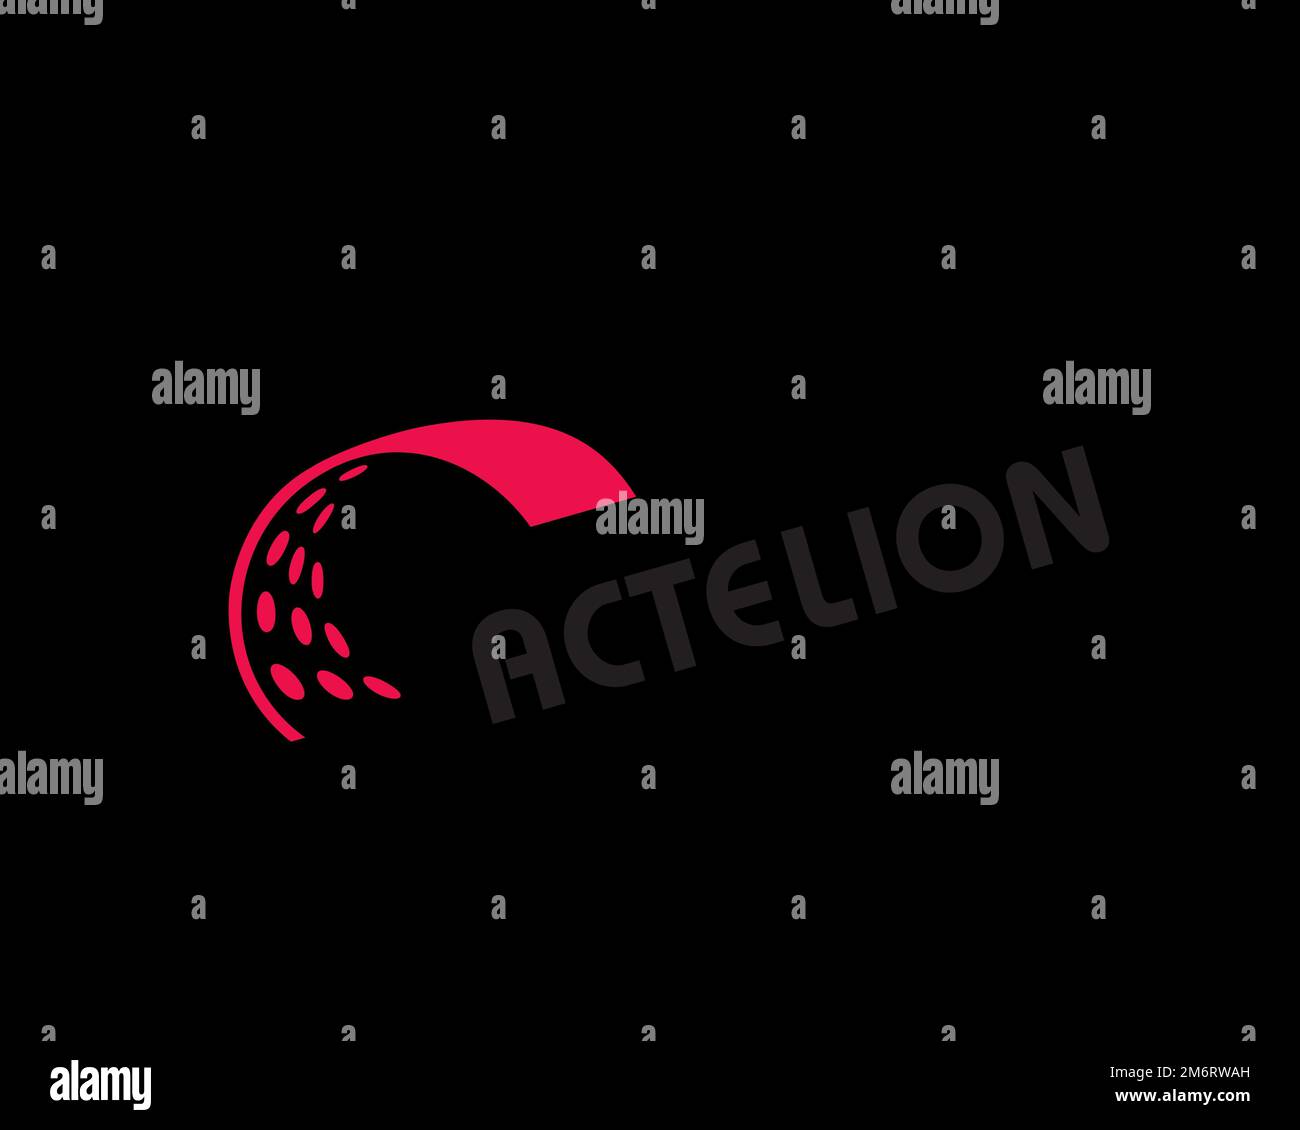 Actelion, rotated logo, black background Stock Photo